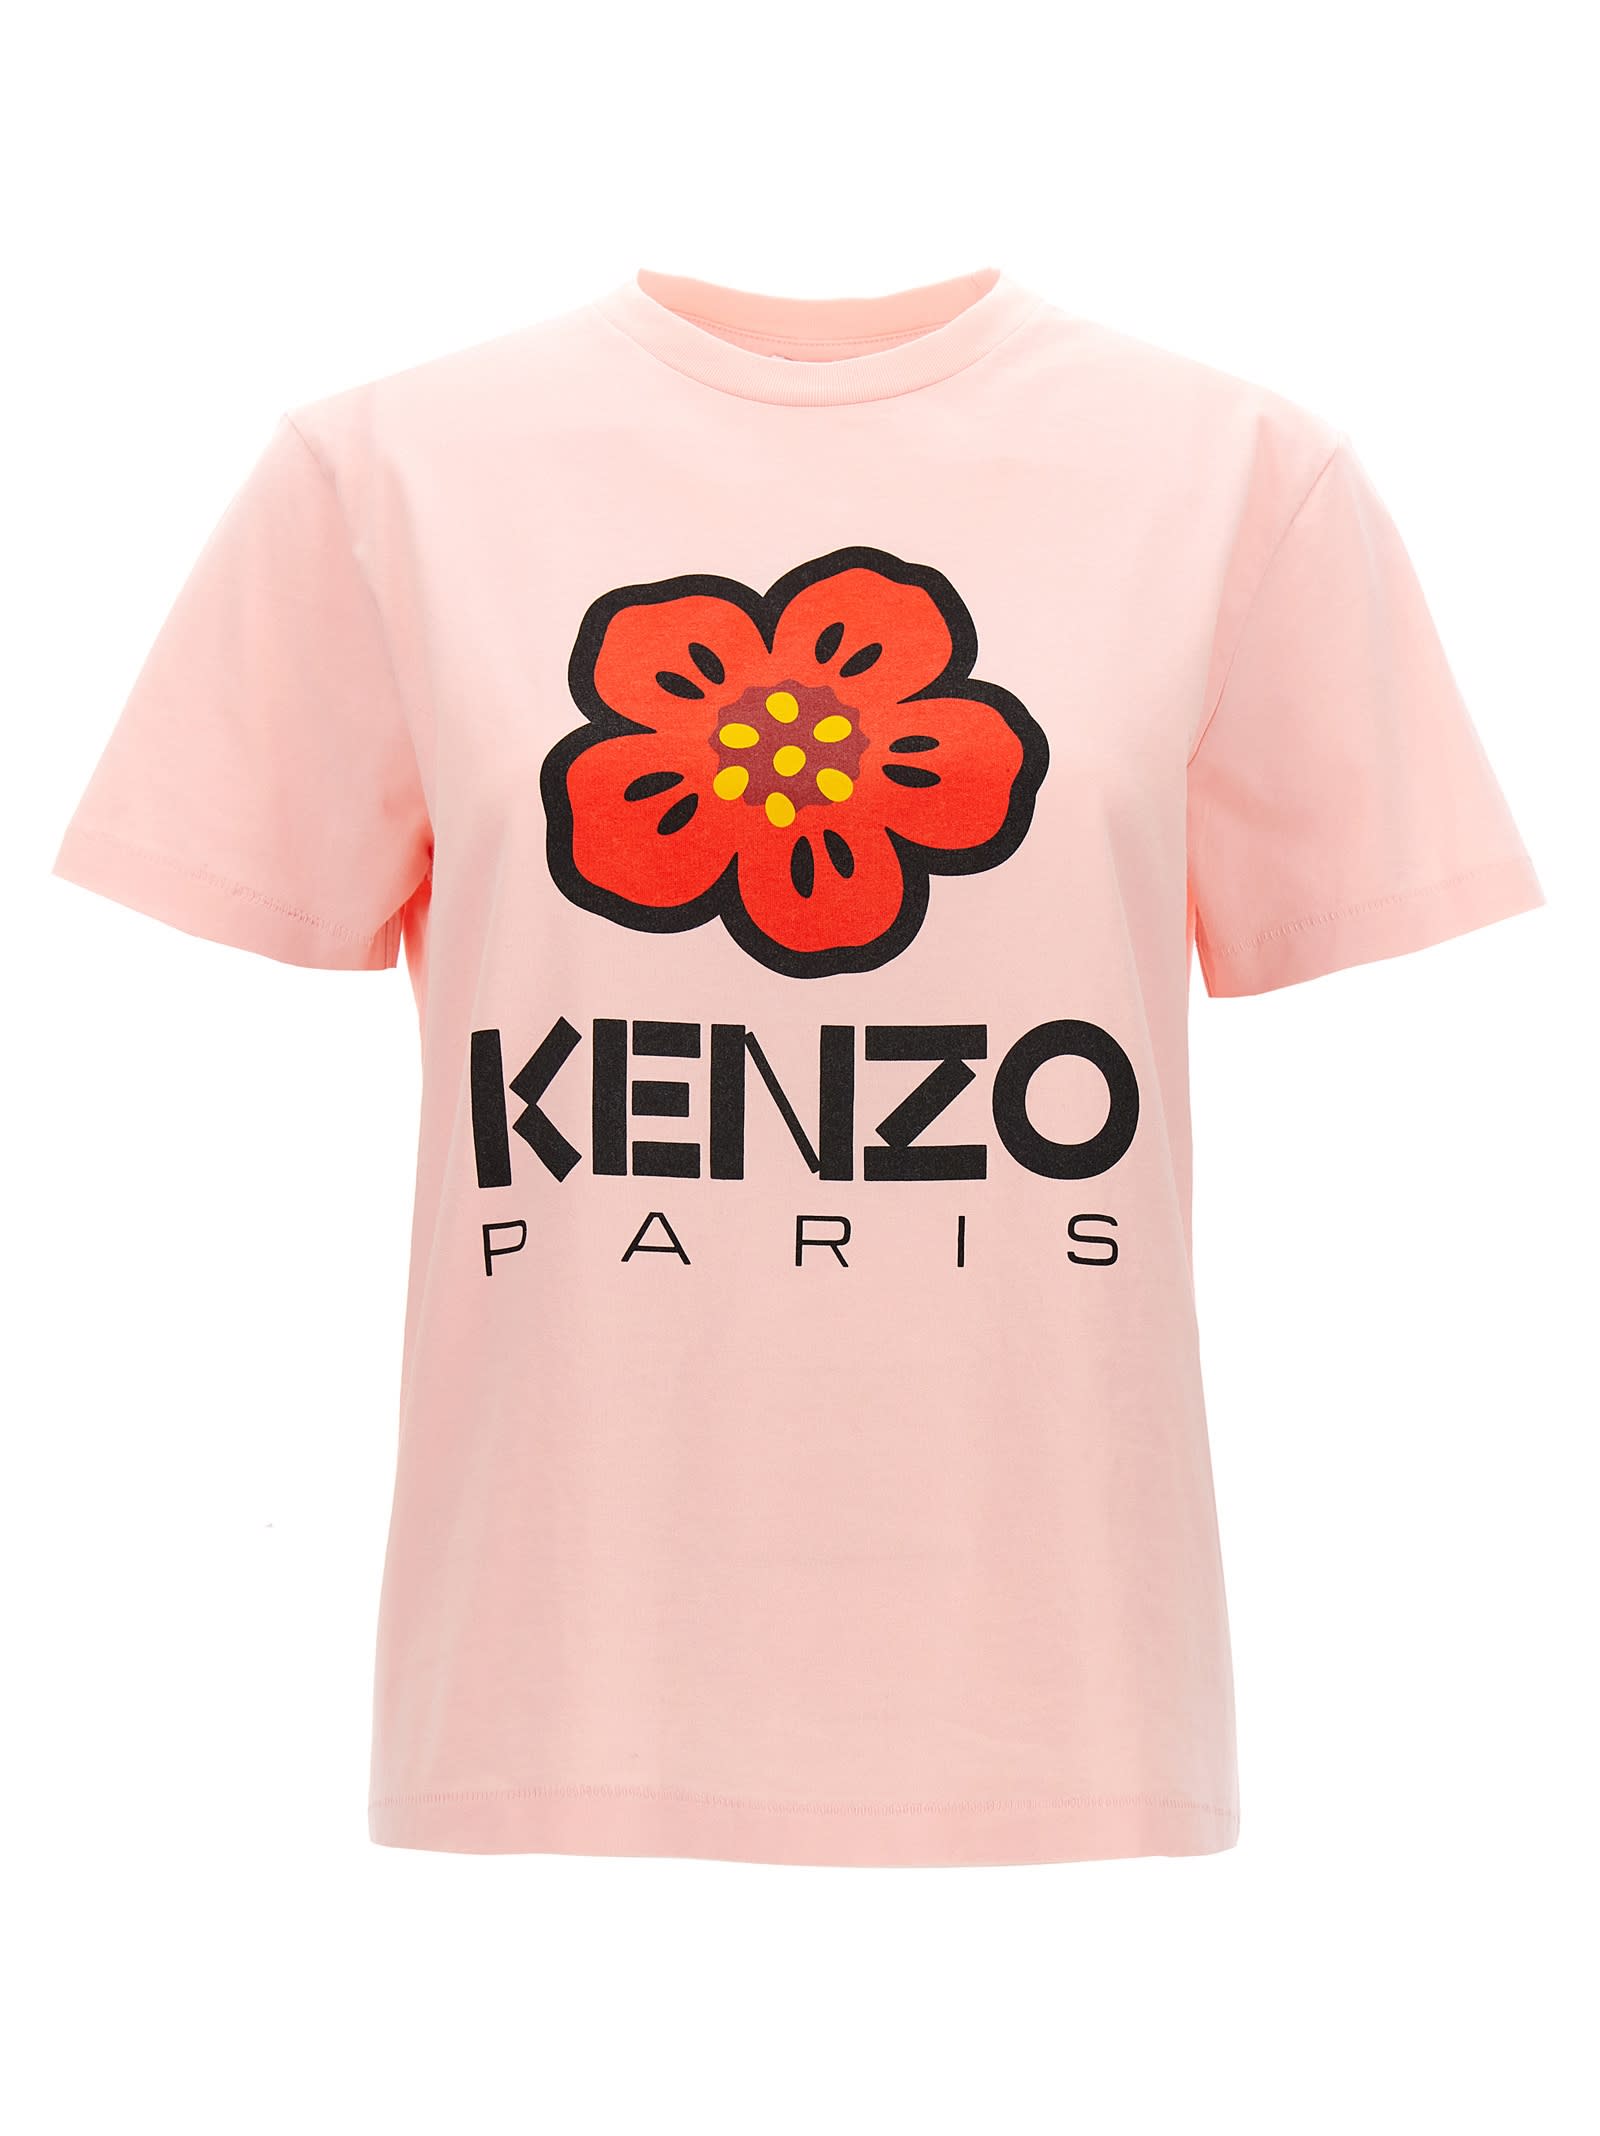 KENZO KENZO PARIS T-SHIRT